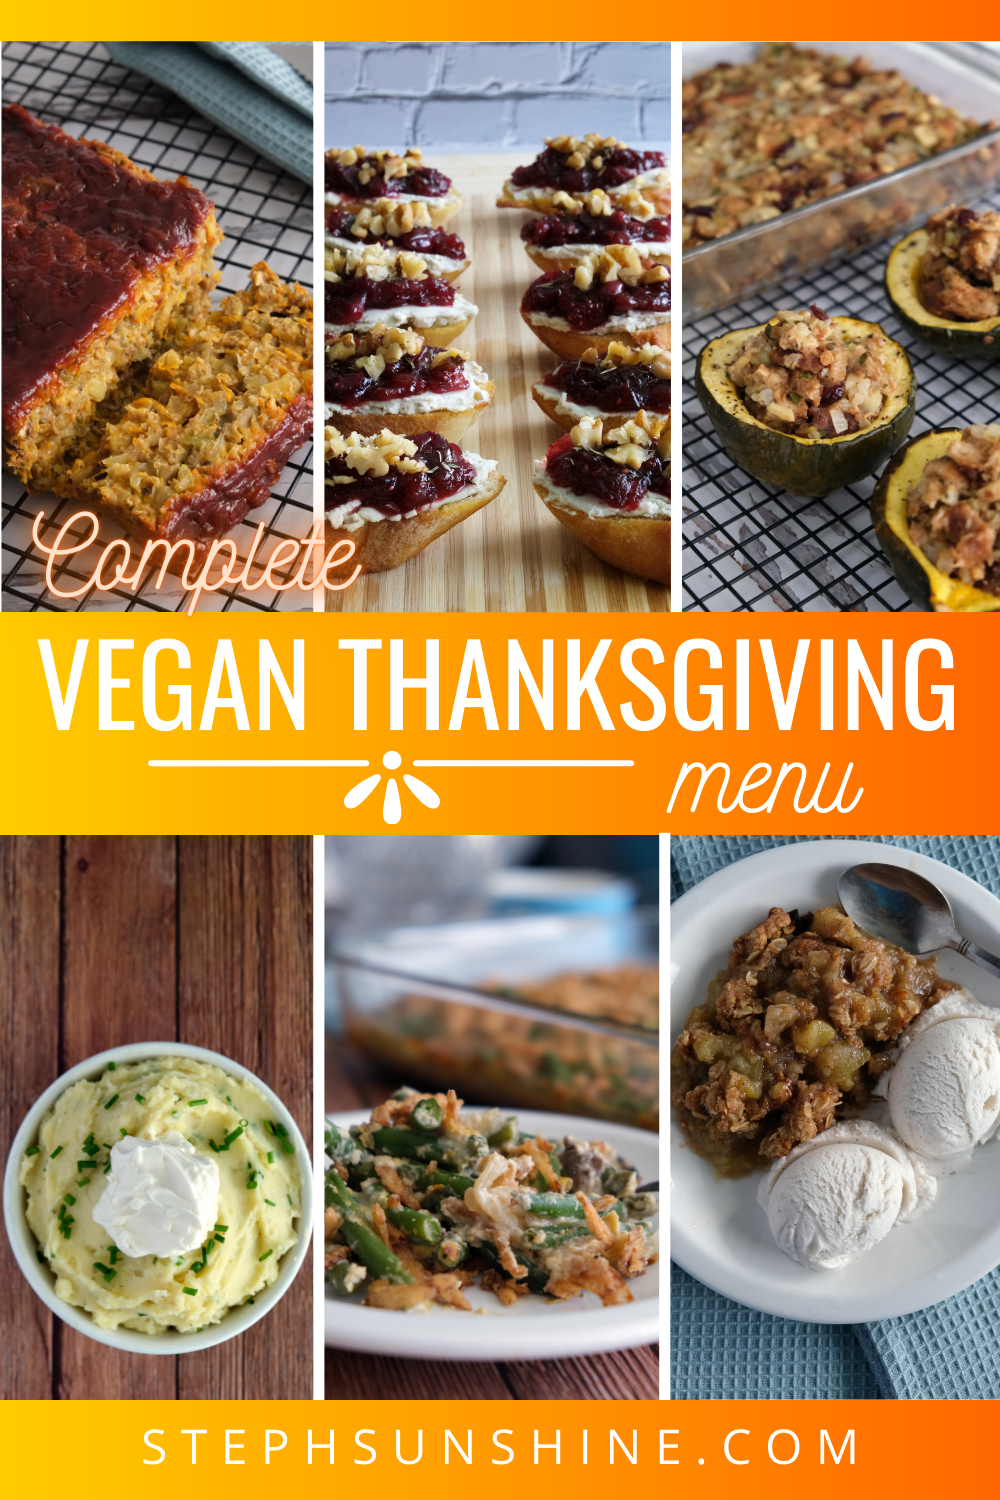 Complete Vegan Thanksgiving Menu and Recipes | Steph Sunshine